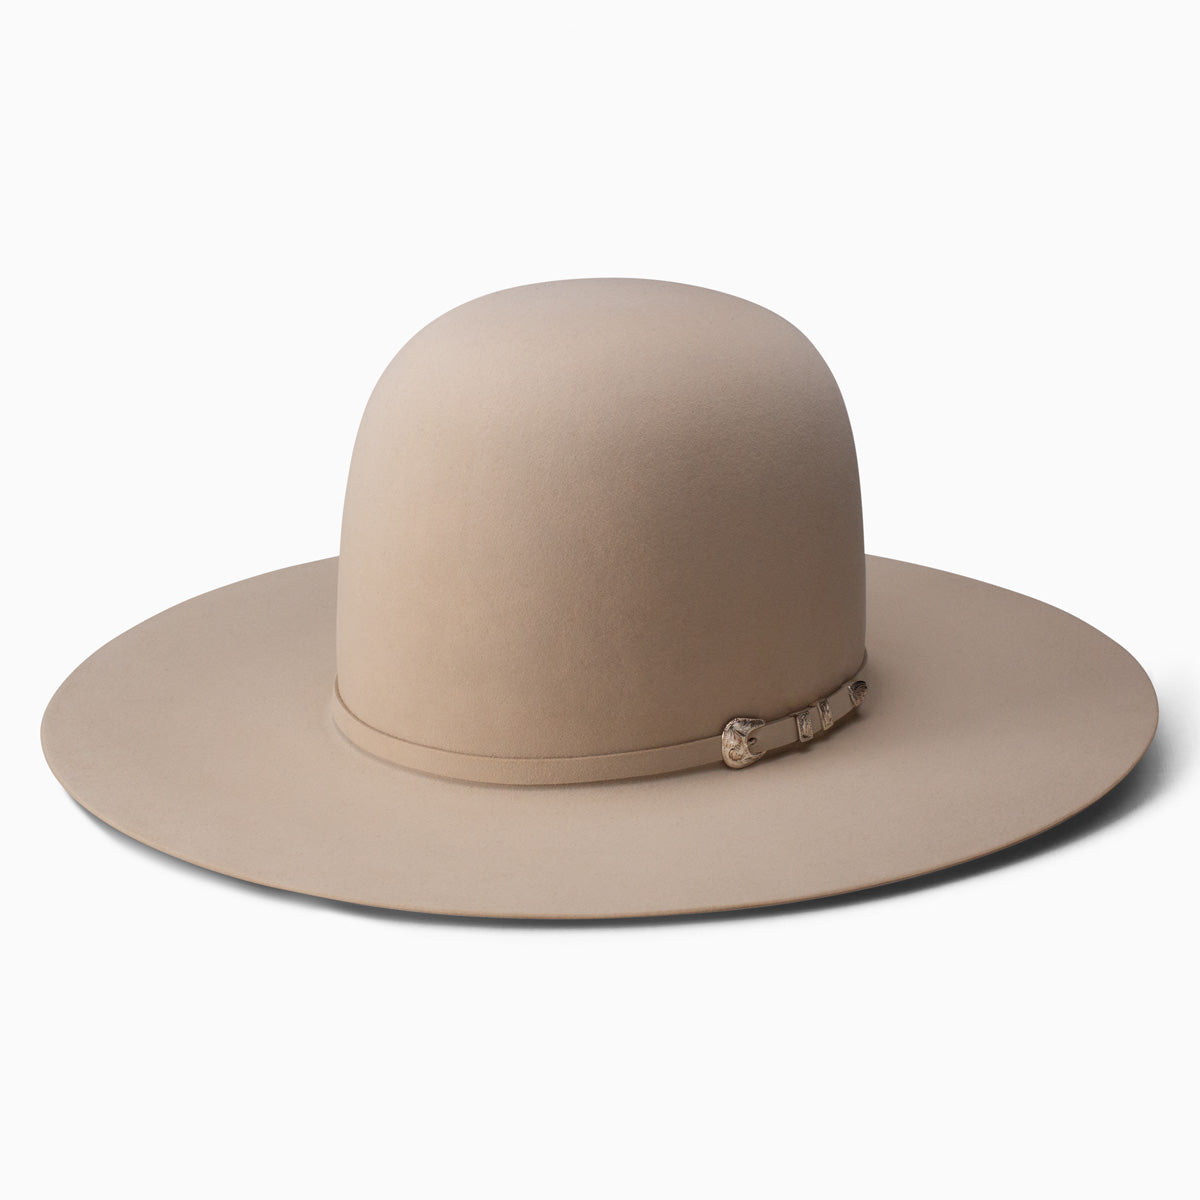 Cody Johnson Cowboy Hats by Resistol